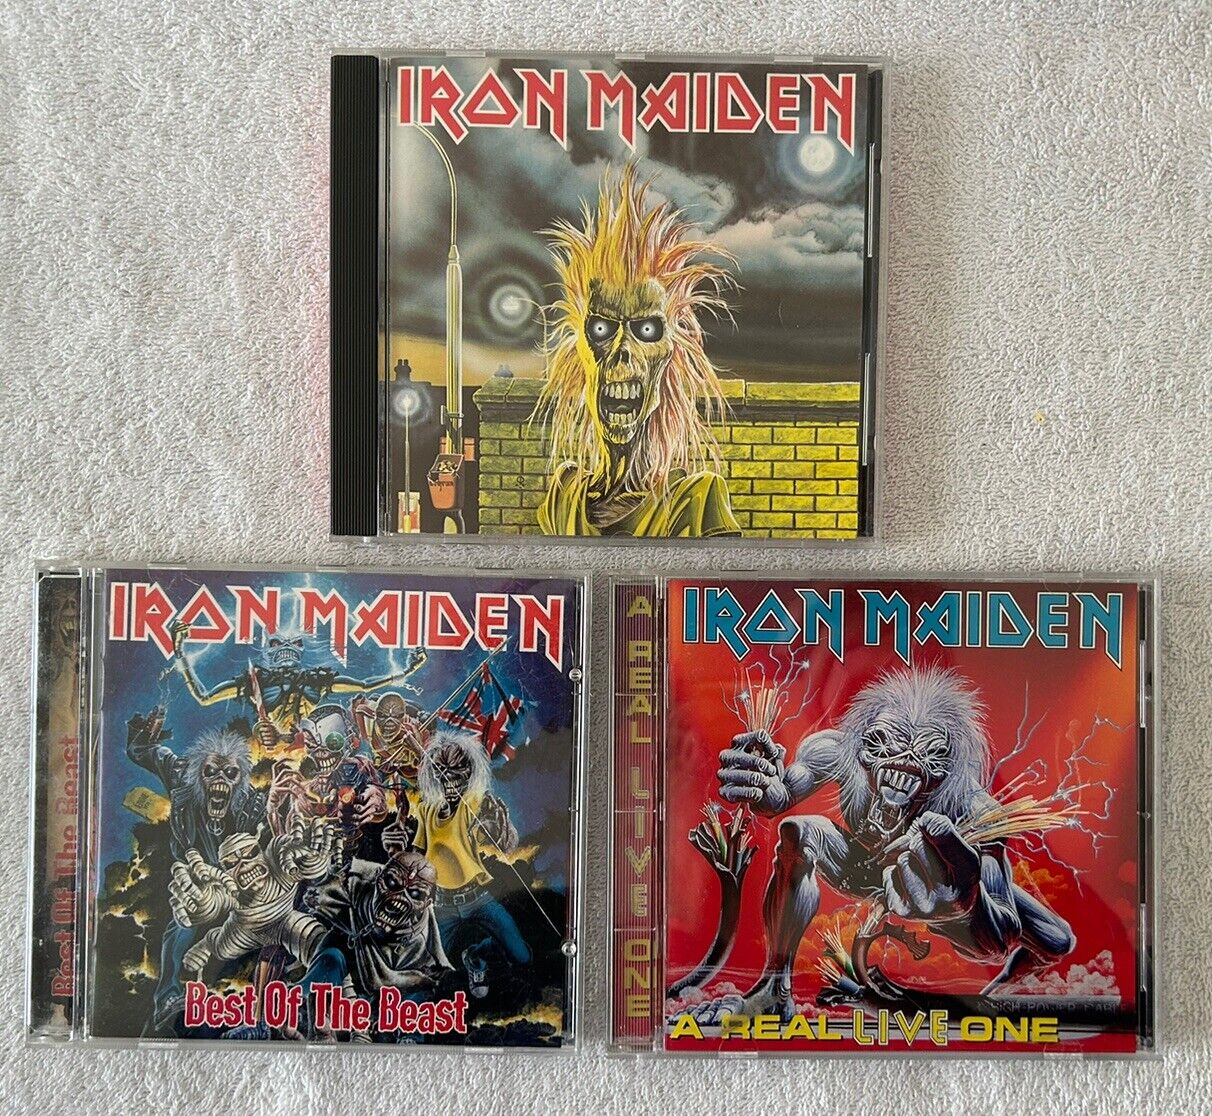 Lot of 3 CDs: IRON MAIDEN, 1980-1996